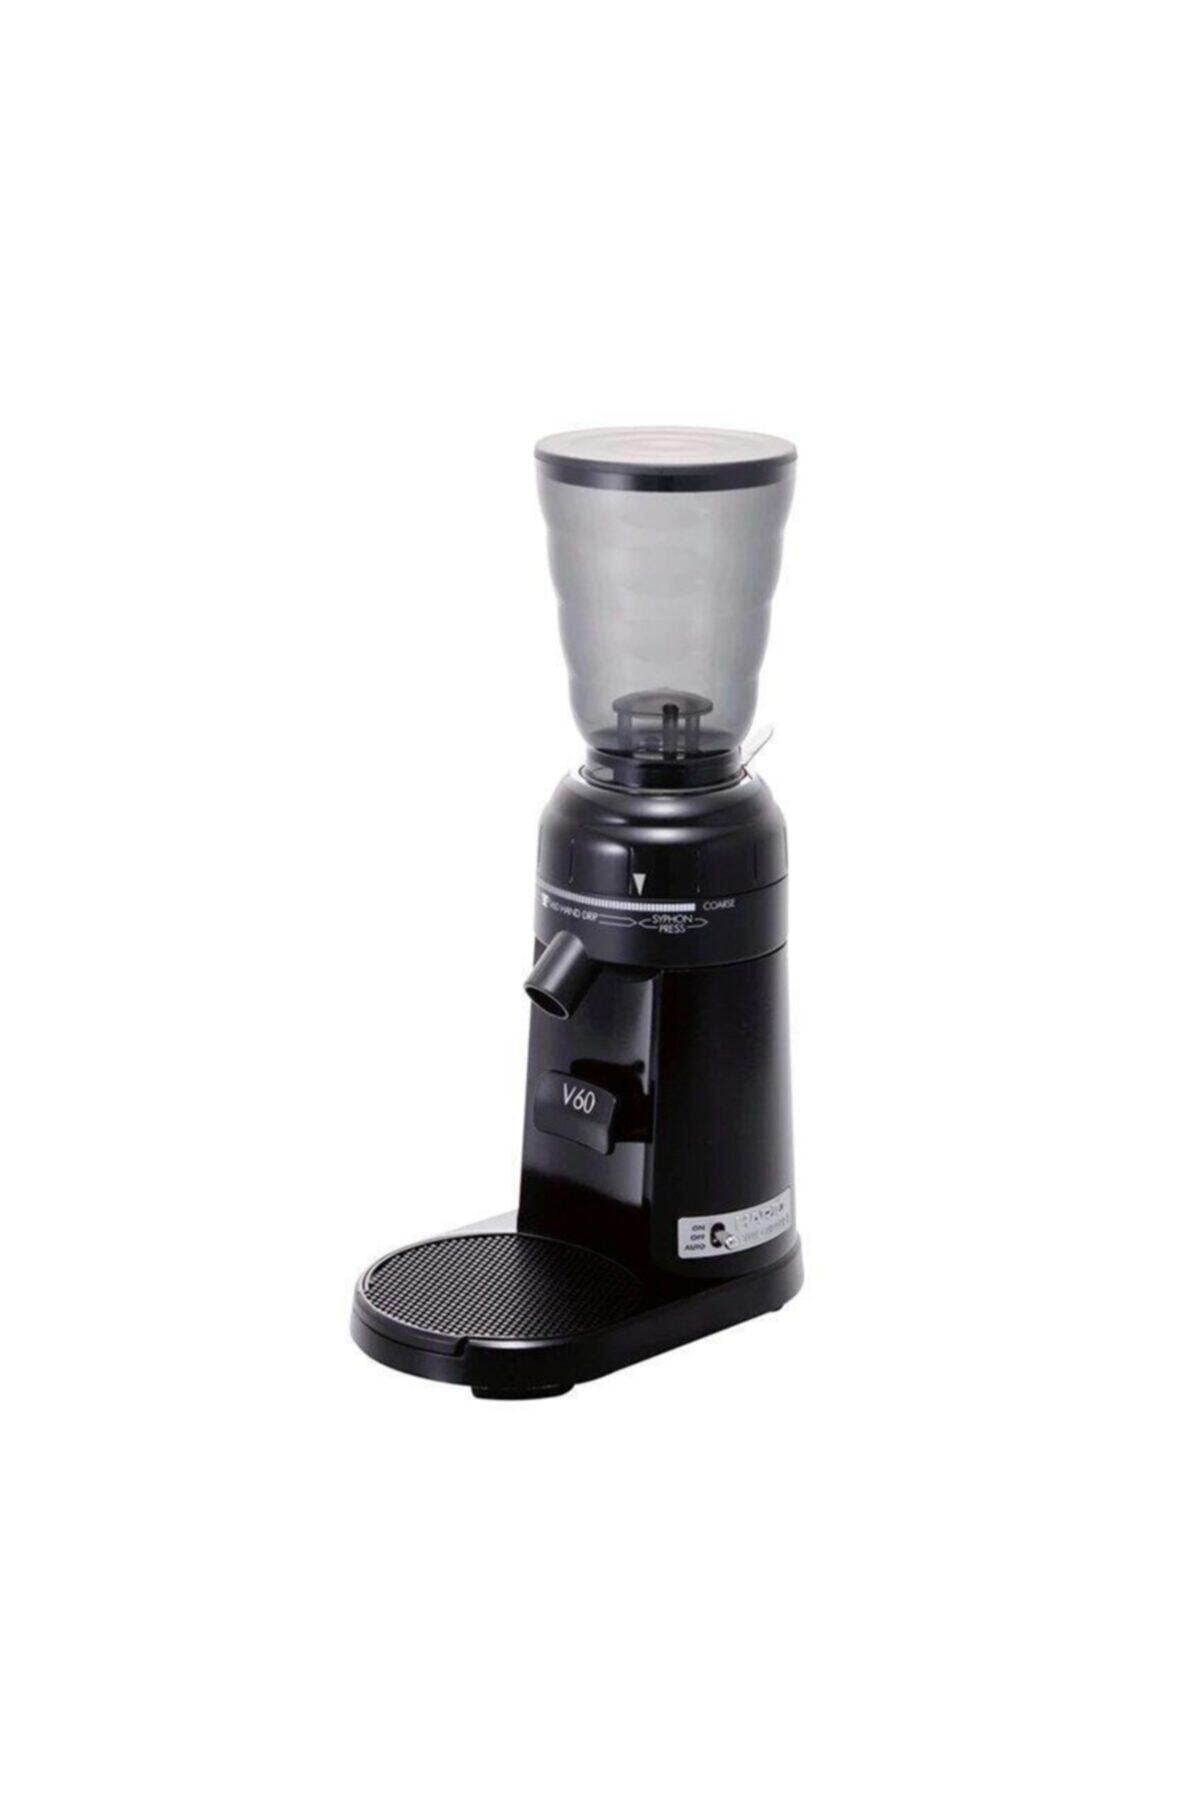 Hario V60 Electric Coffee Grinder - Harıo V60 Elektrikli Kahve Değirmeni